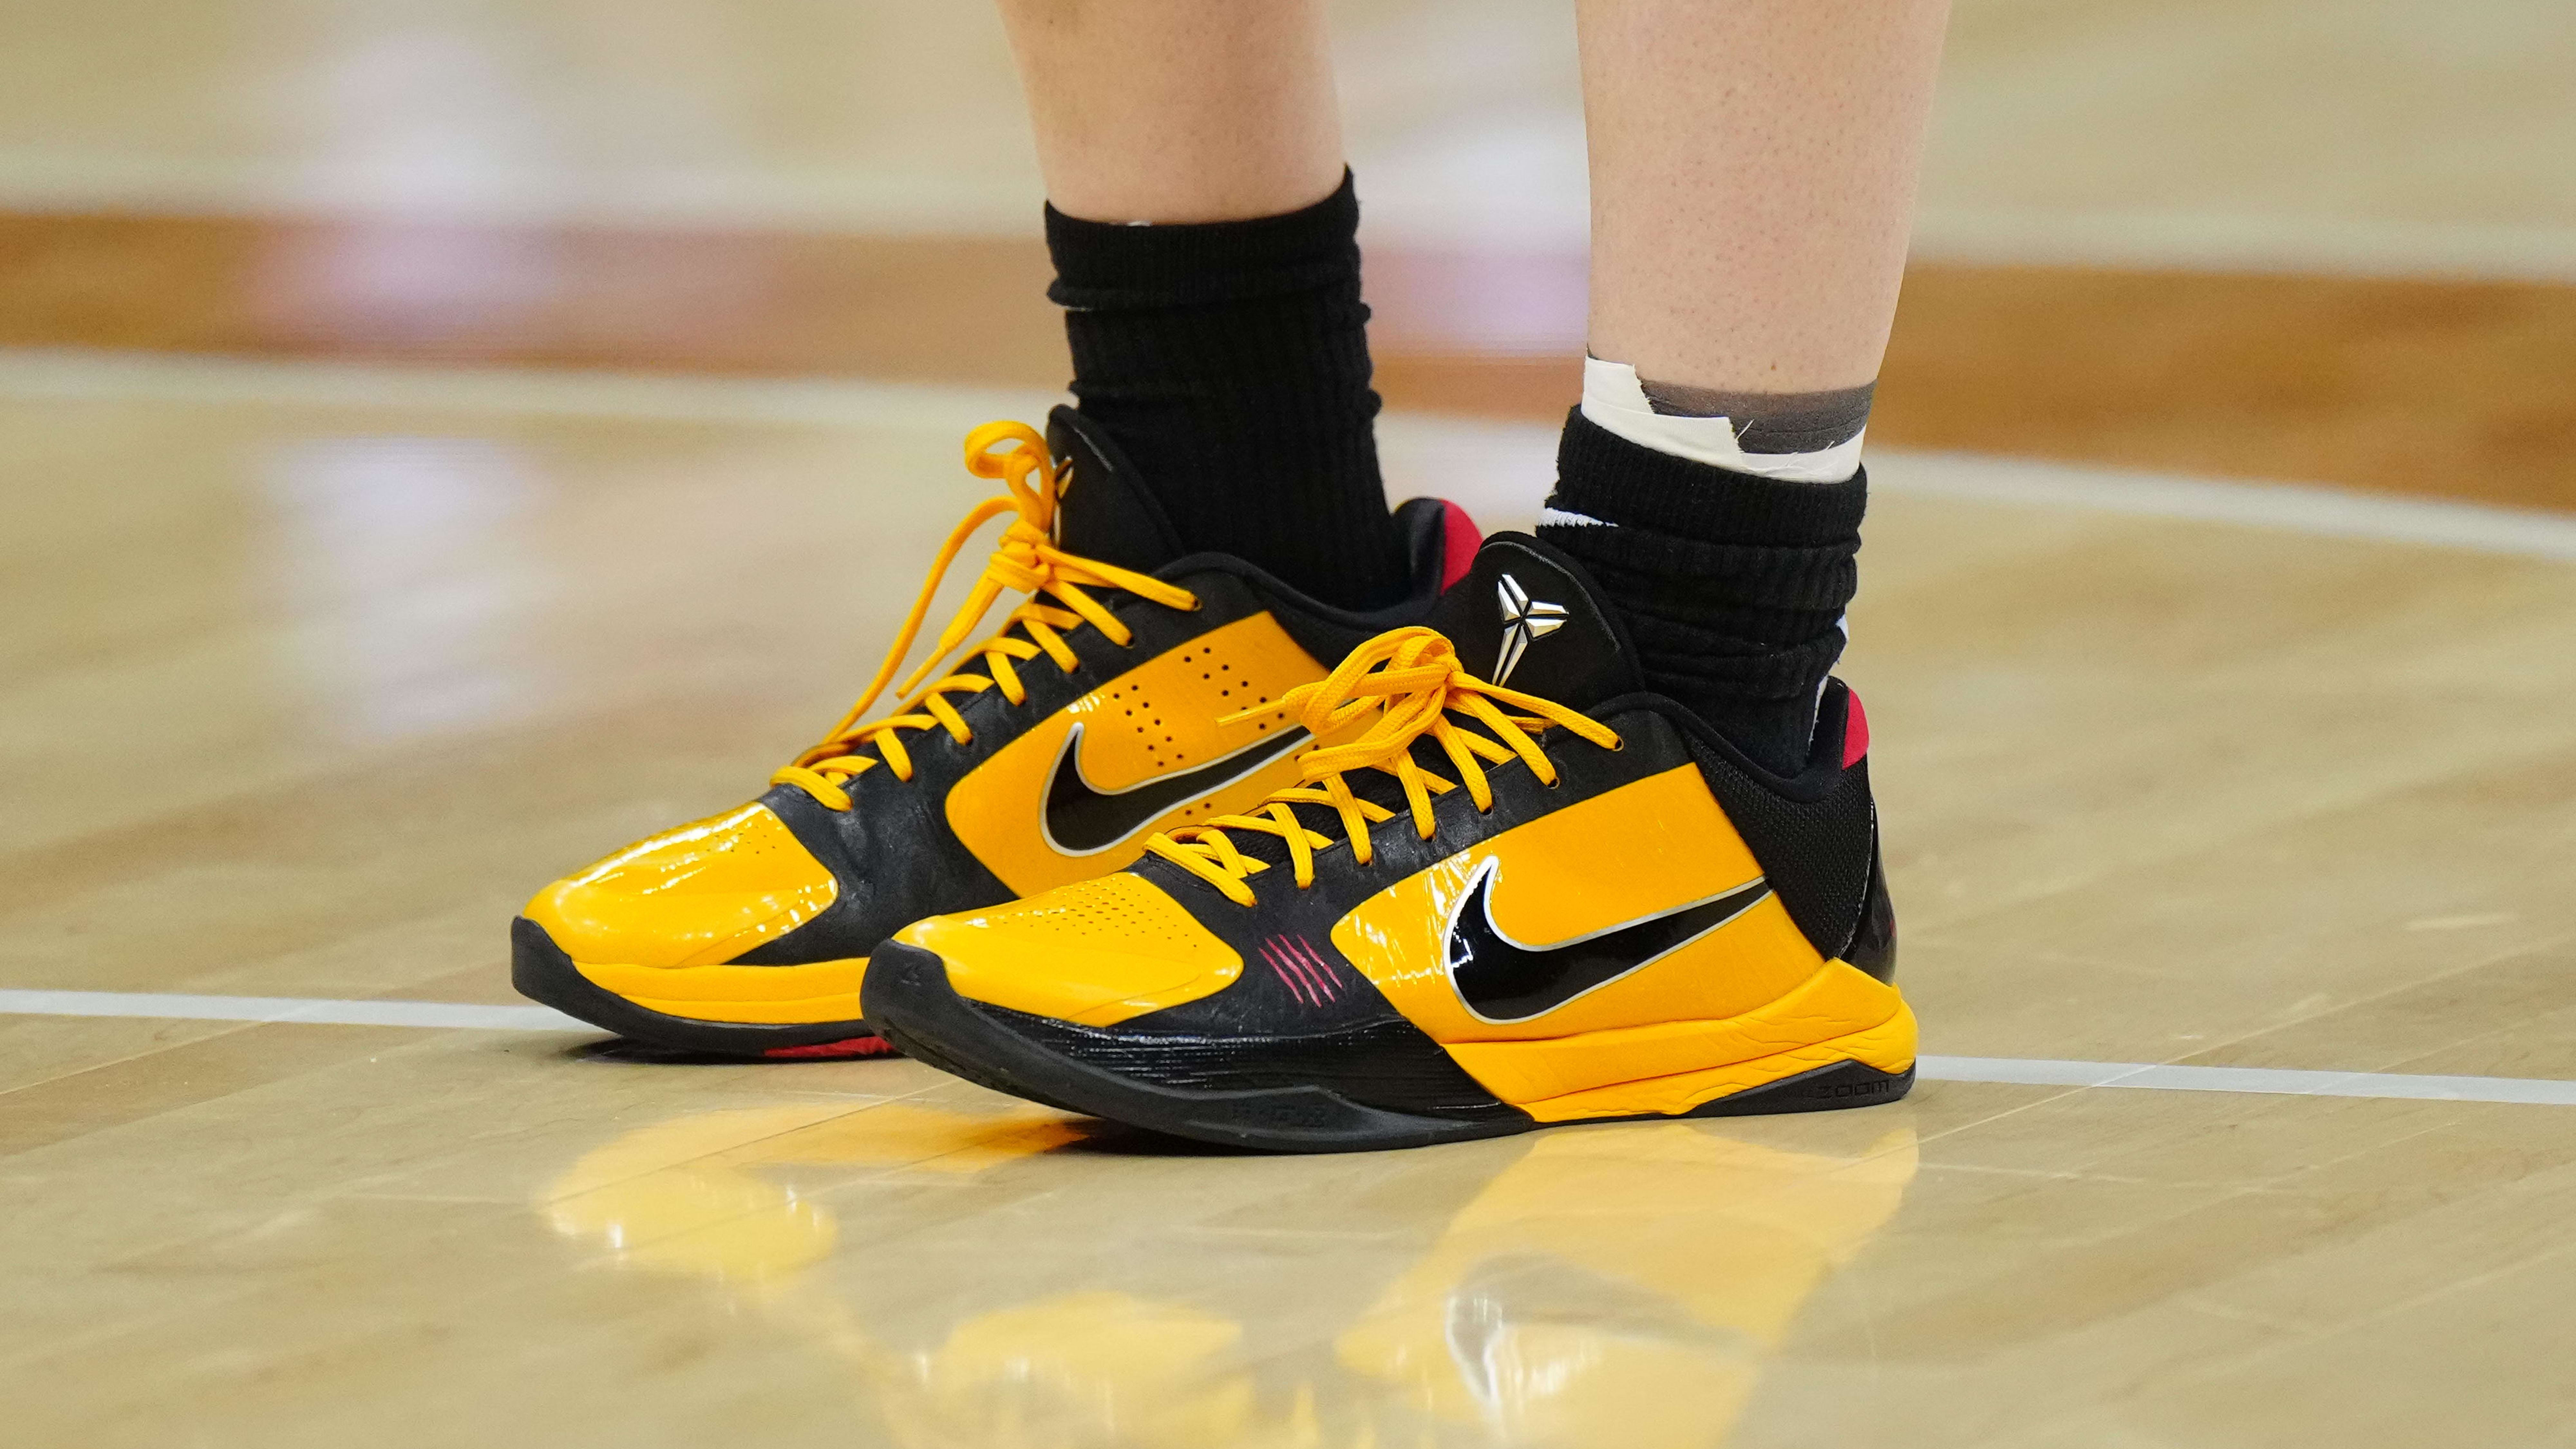 Iowa Hawkeyes guard Caitlin Clark's black and gold Nike Kobe sneakers.